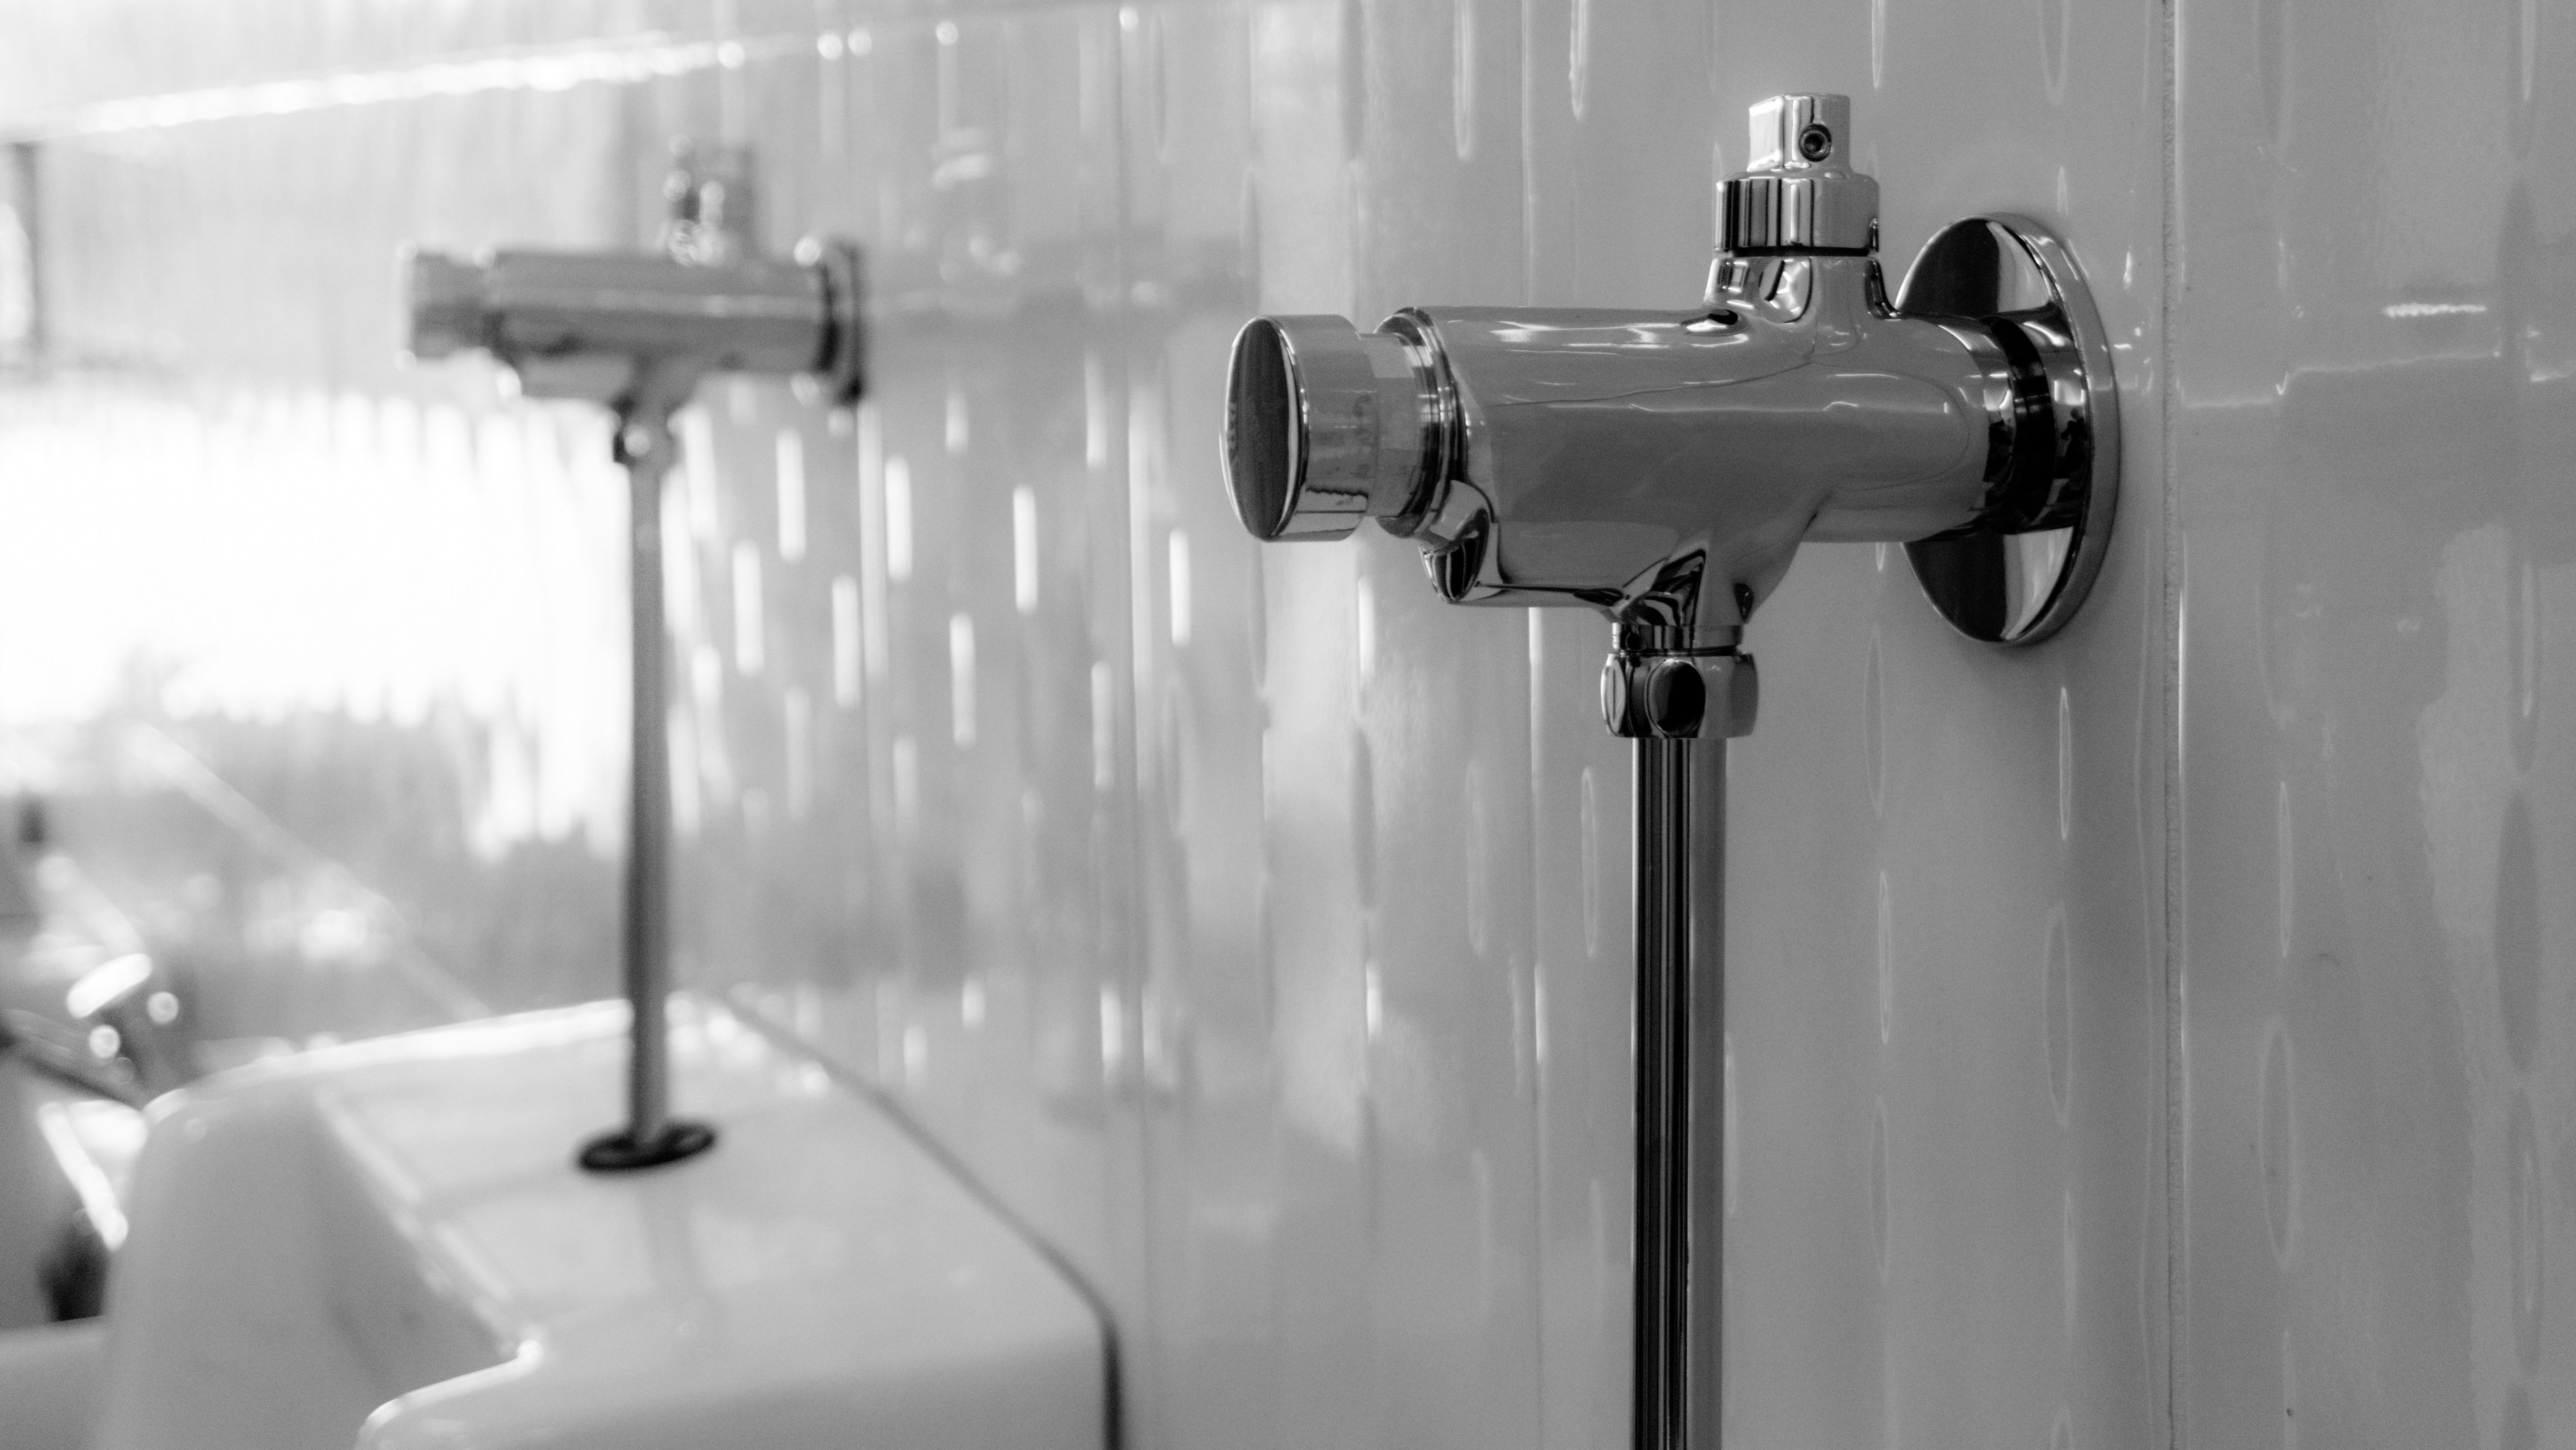 A modern bidet attachment for improved personal hygiene in a bathroom